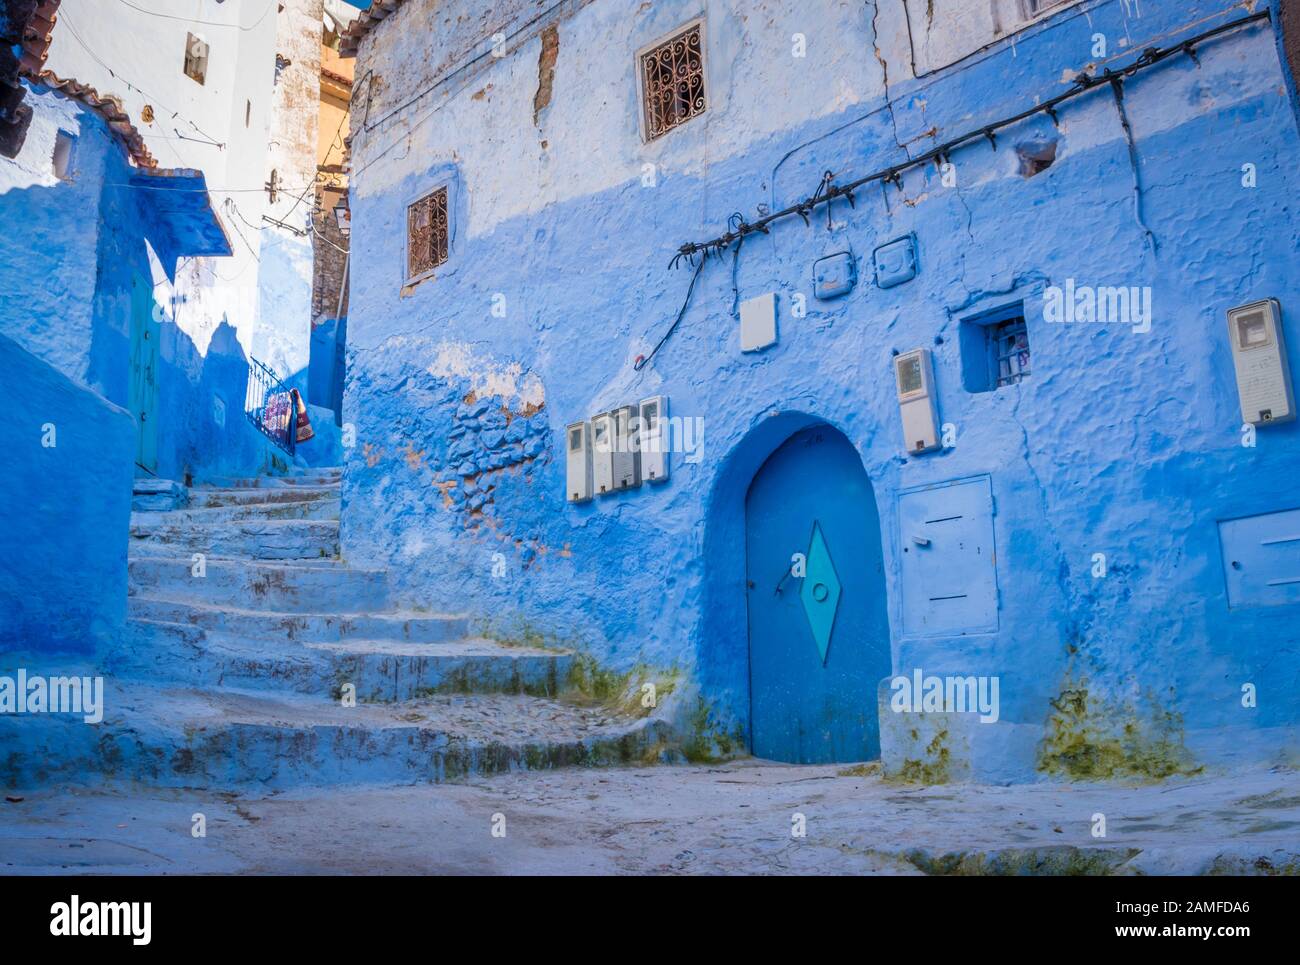 Escalier bleu dans la rue Chefchaouen, Médina, Maroc Banque D'Images